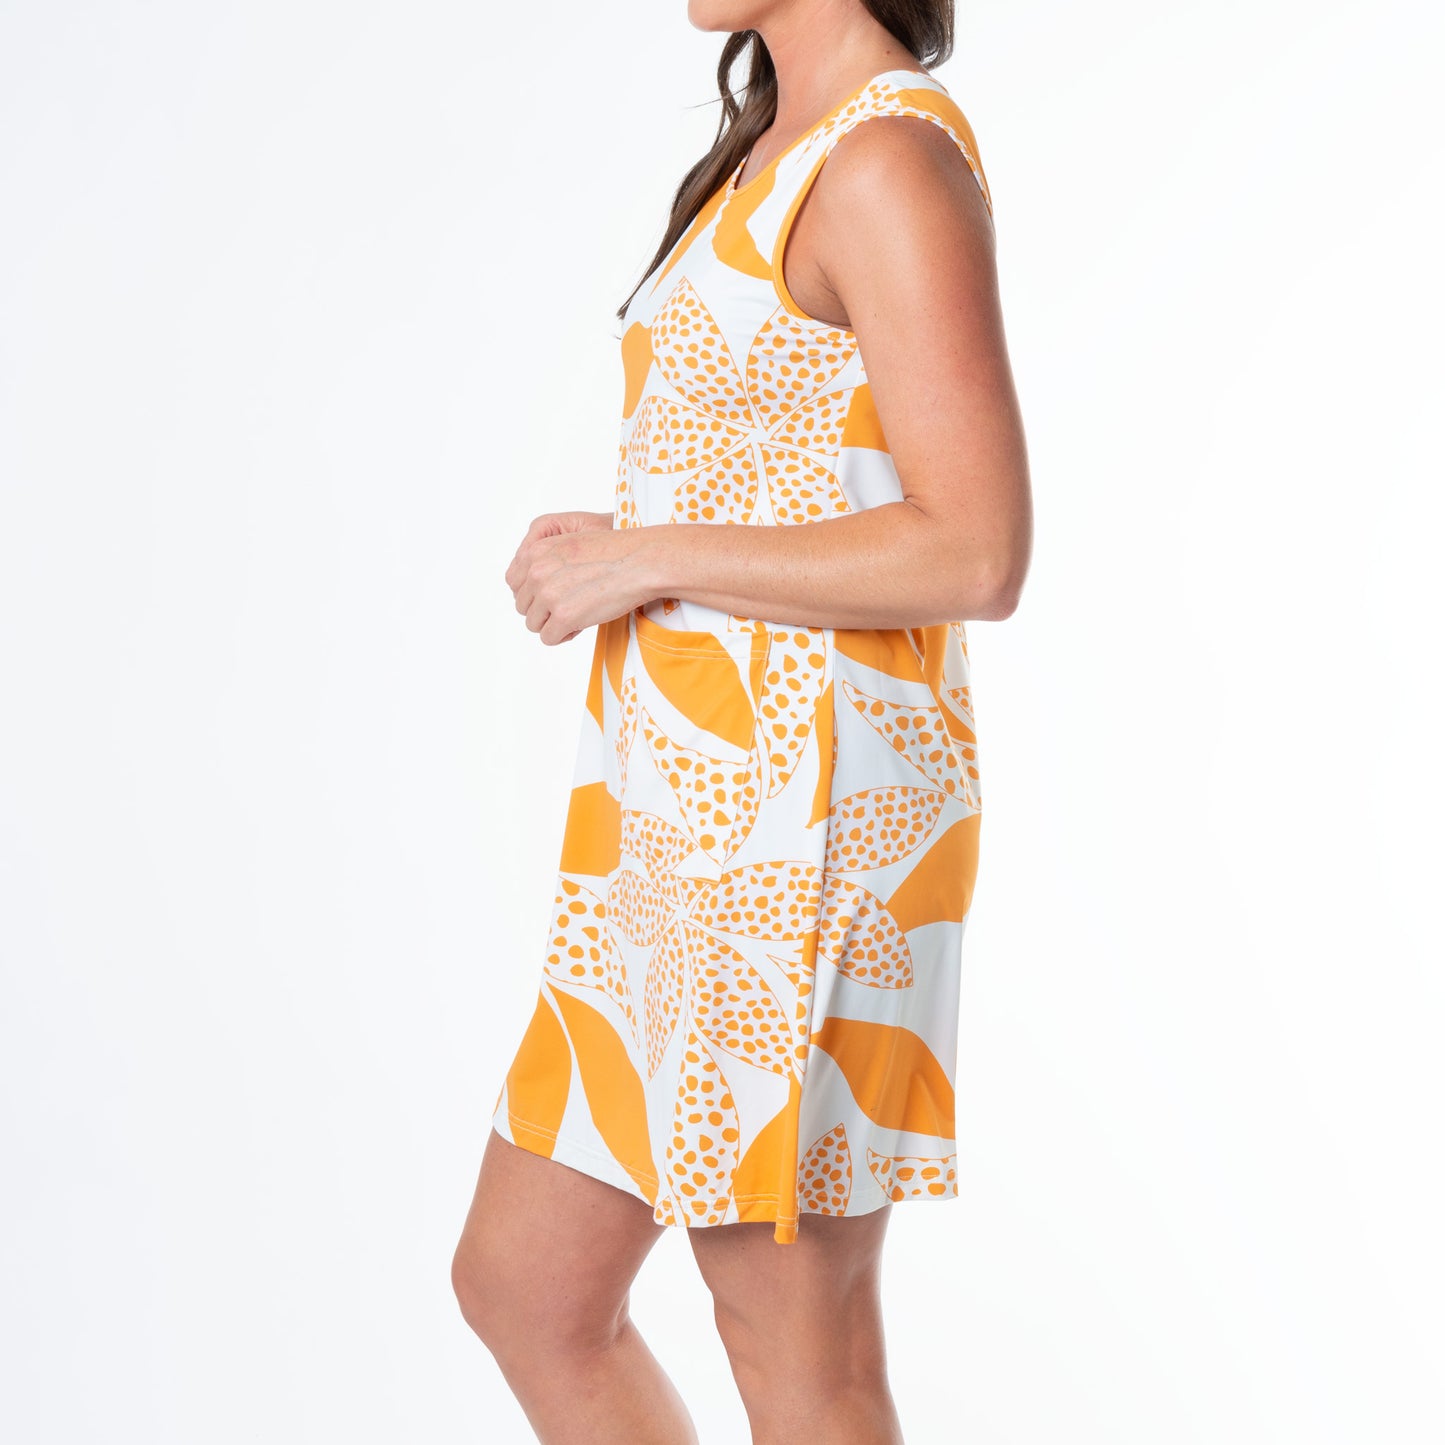 Marley UPF 50+ Jersey Printed Sleeveless Dress with Pockets